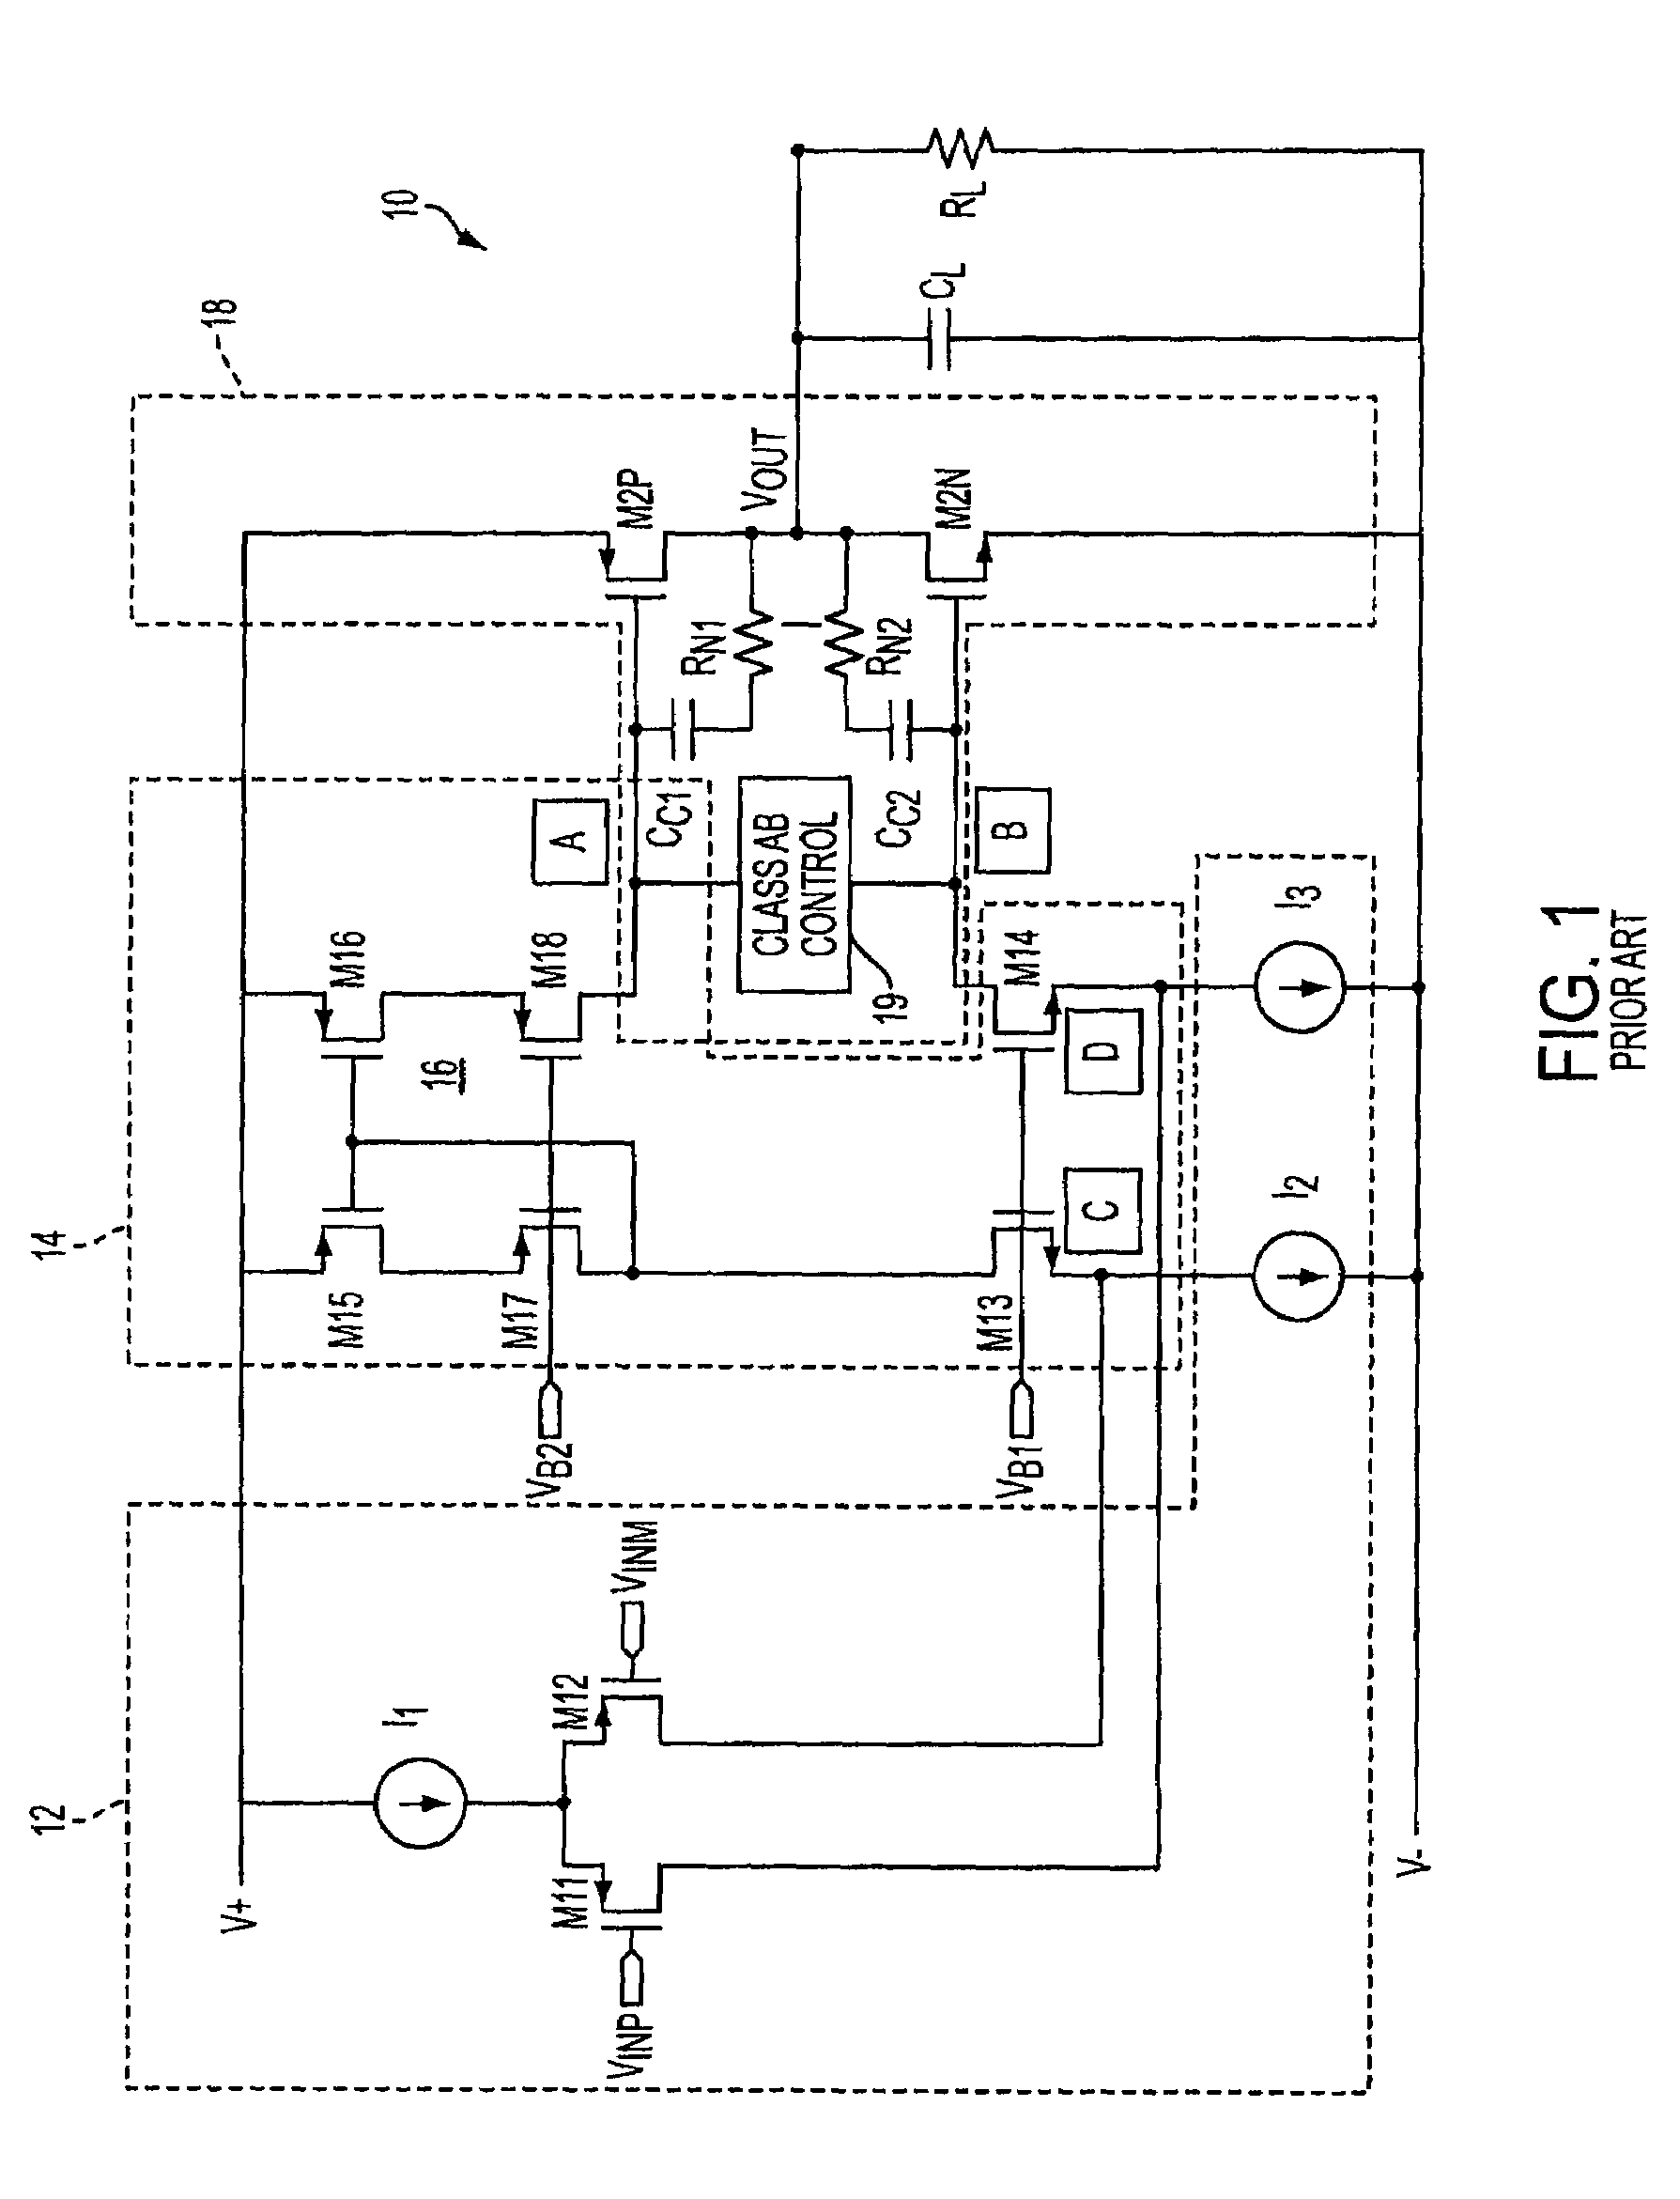 Class AB folded-cascode amplifier having cascode compensation